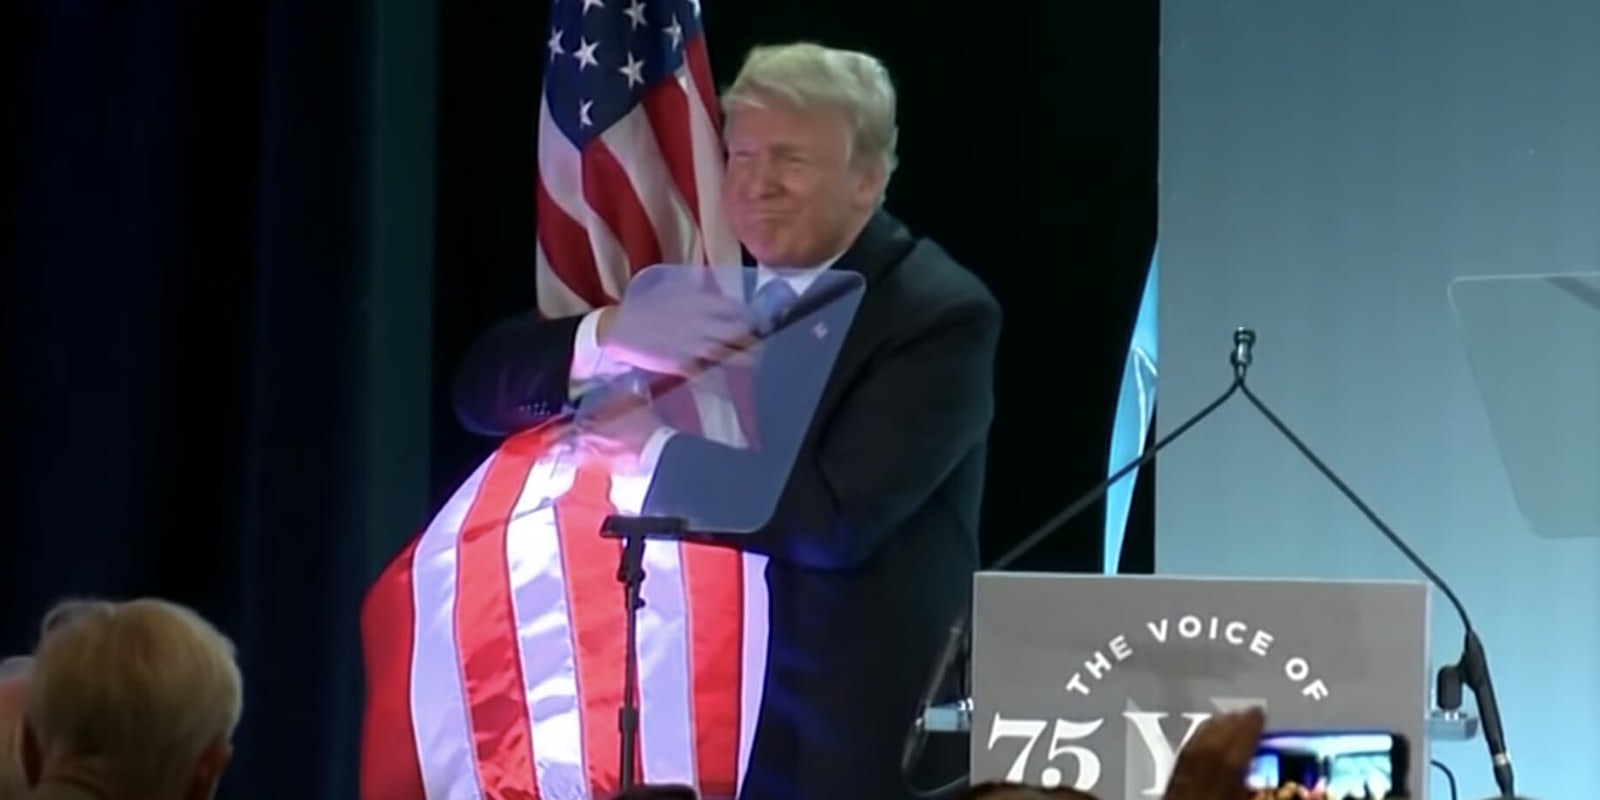 Trump hugs American flag